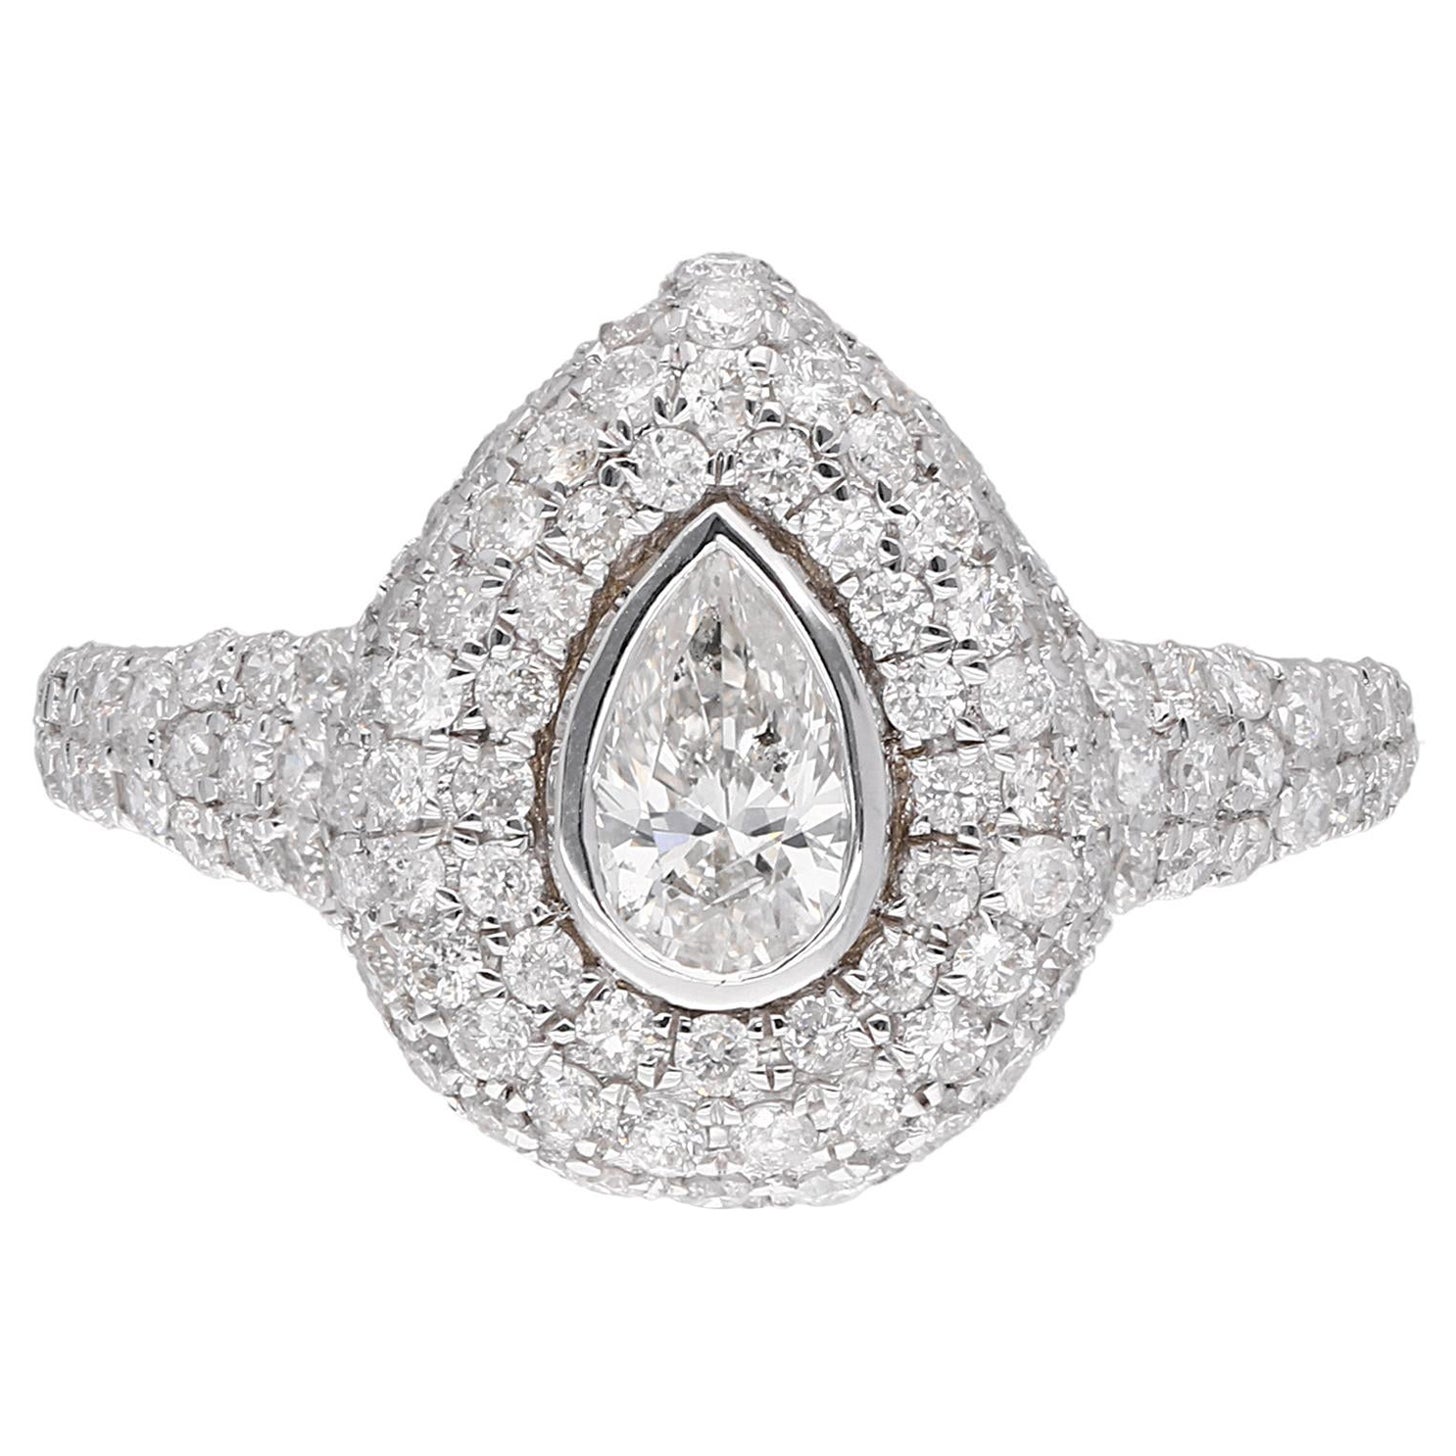 1.54 Carat Pear Diamond Studded Ring 18 Karat White Gold Handmade Fine Jewelry For Sale